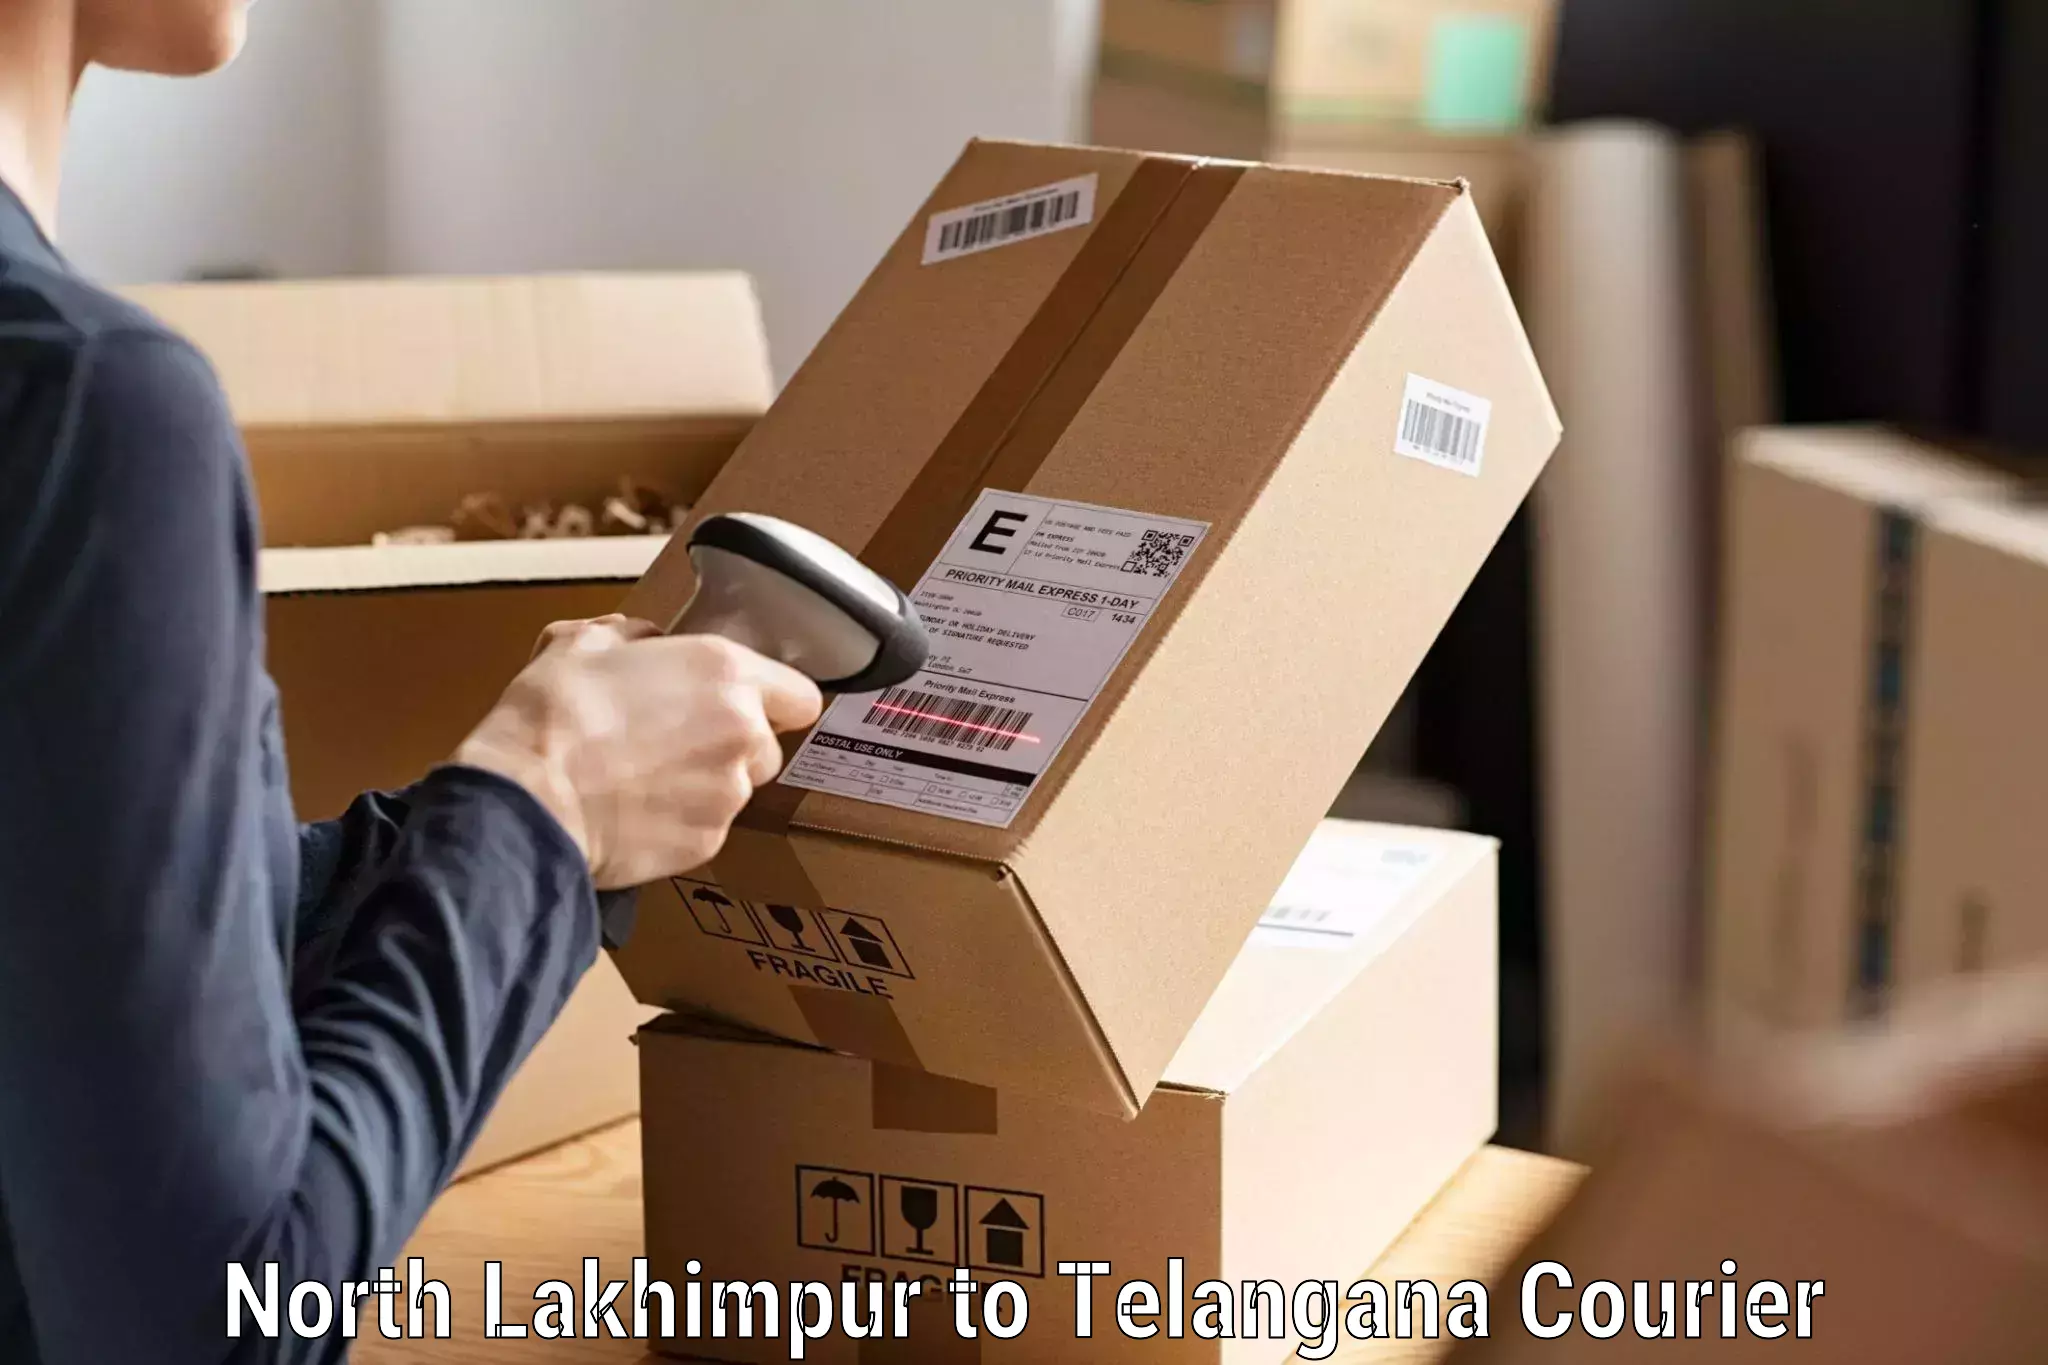 Secure packaging in North Lakhimpur to Dahegaon